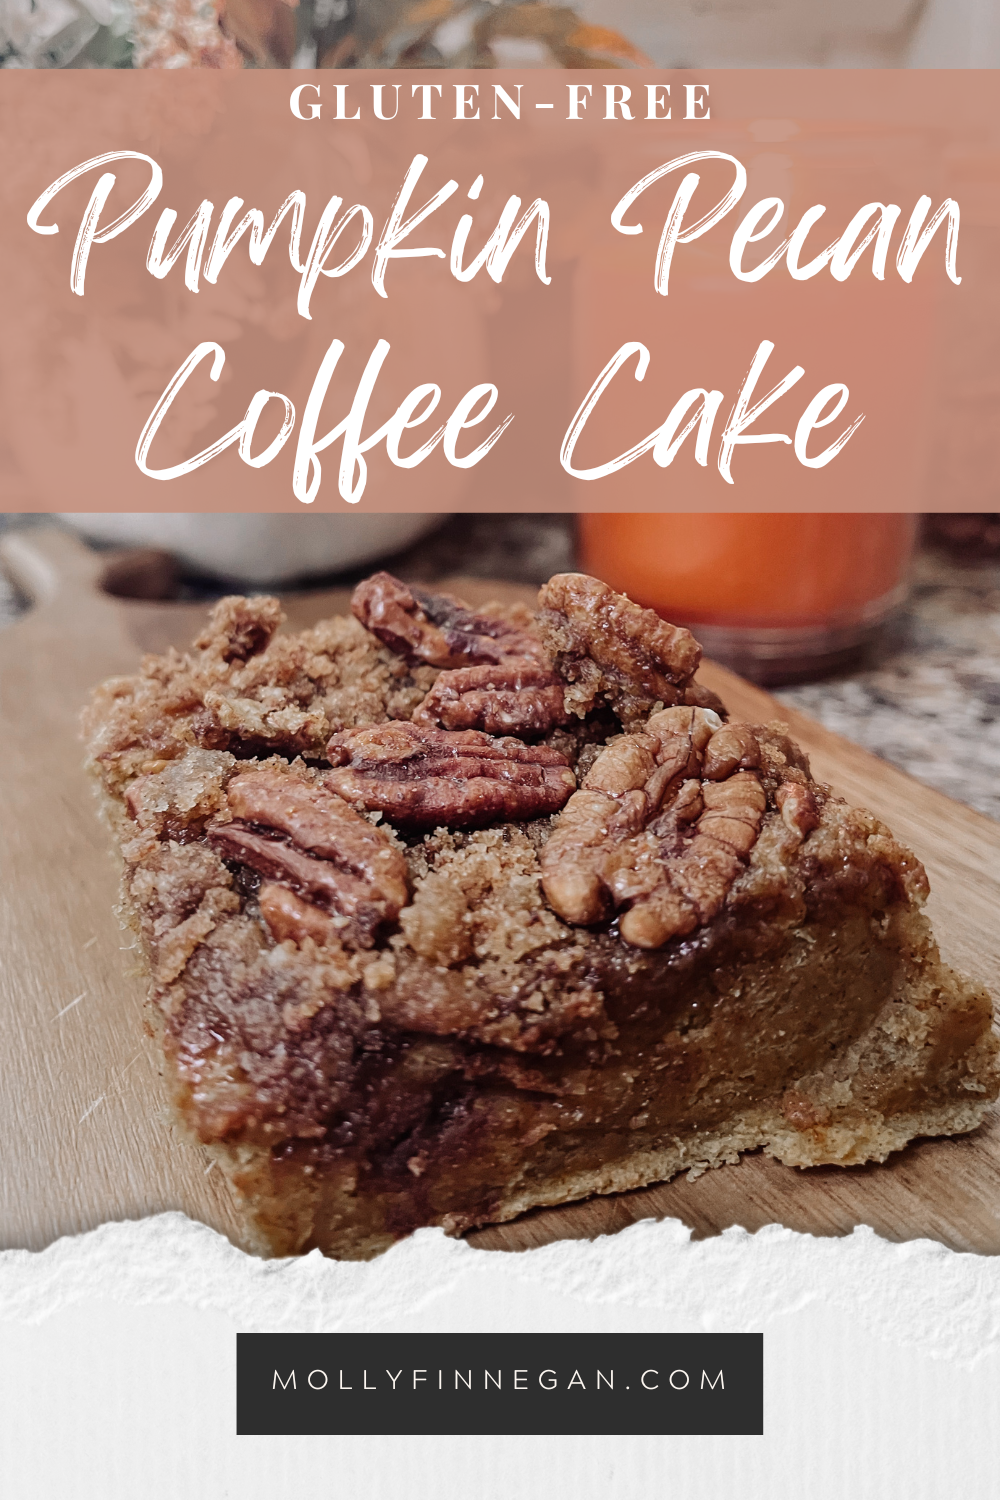 Pumpkin pecan coffee cake pinterest cover